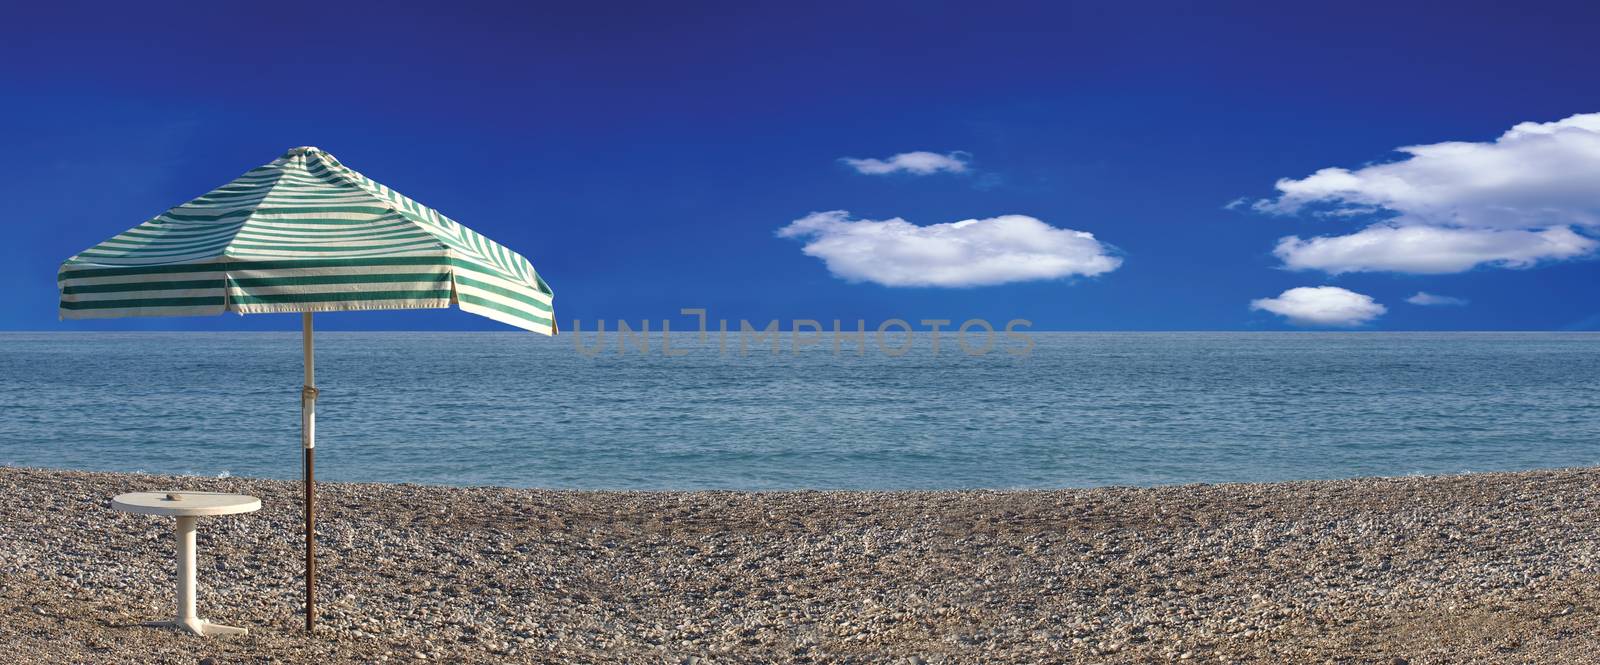 Panorama of striped beach umbrella on the beach